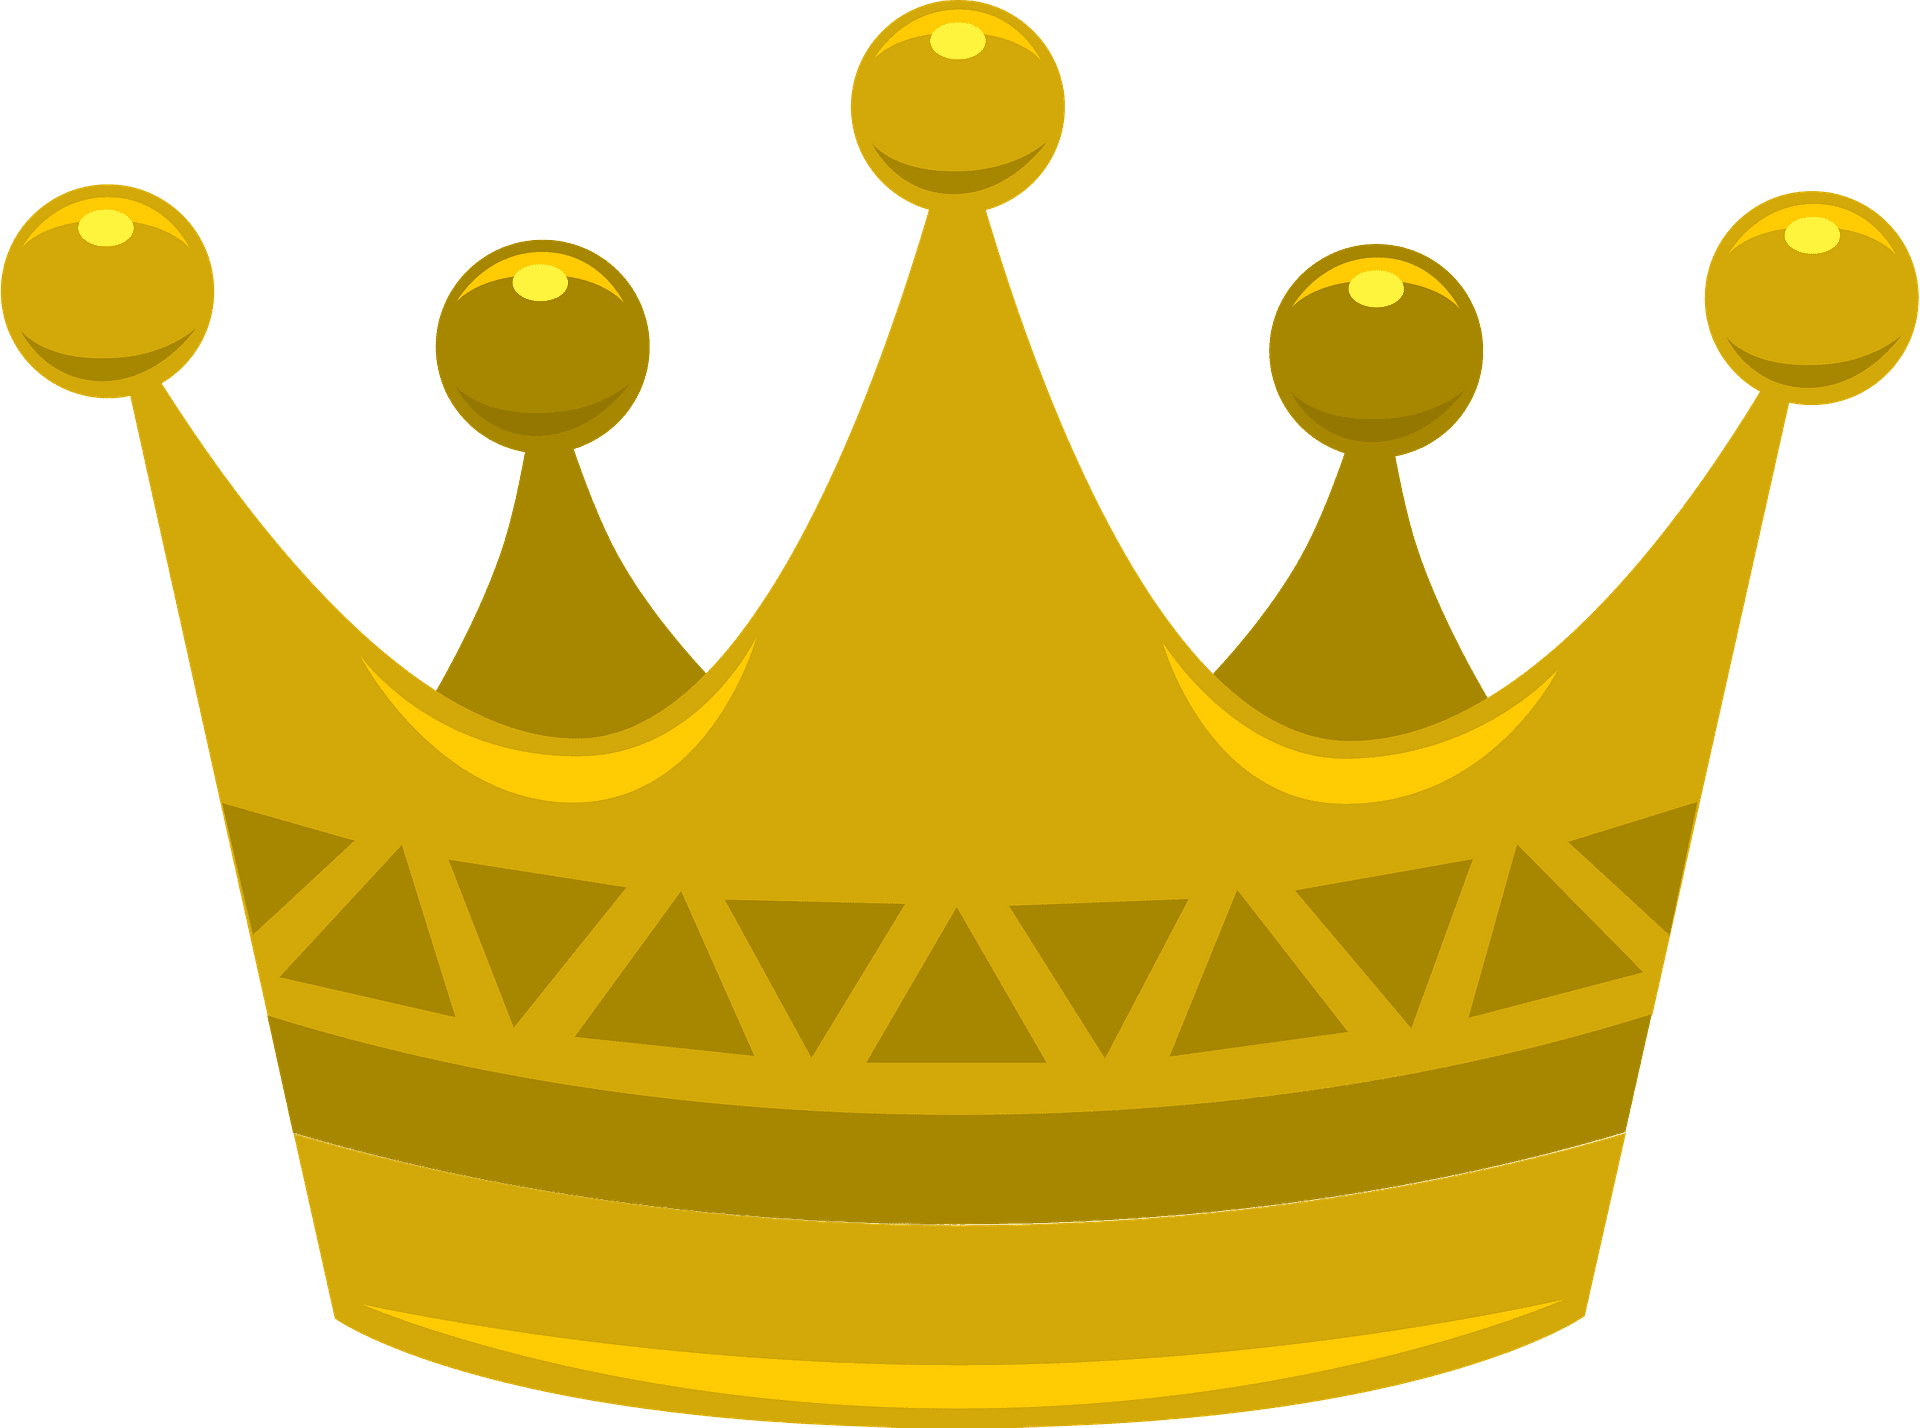 Queen crown clipart clip art